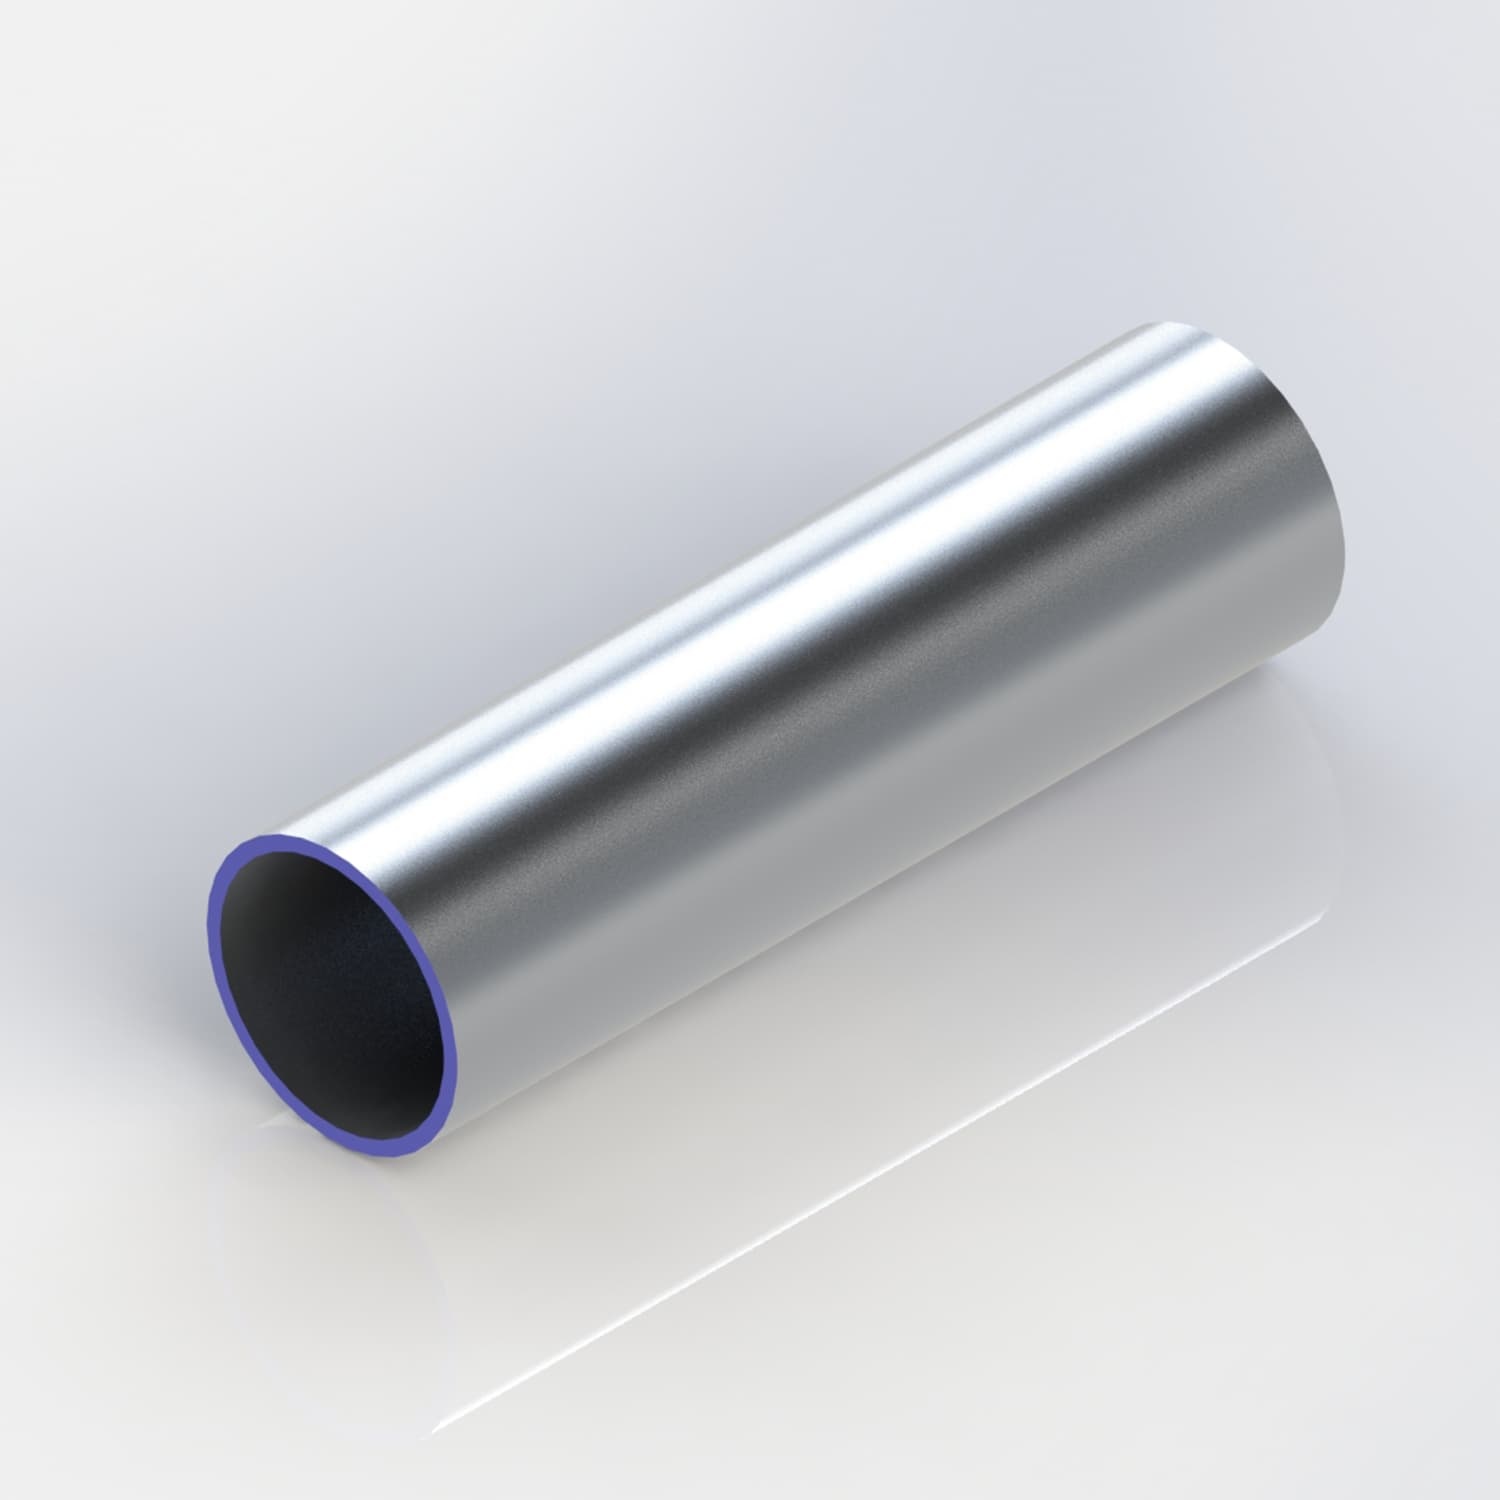  Aluminium buis - 70x5 mm - 6060 T6 - ALU buisprofiel - koker rond - AL pijp - brut - blank - onbehandeld